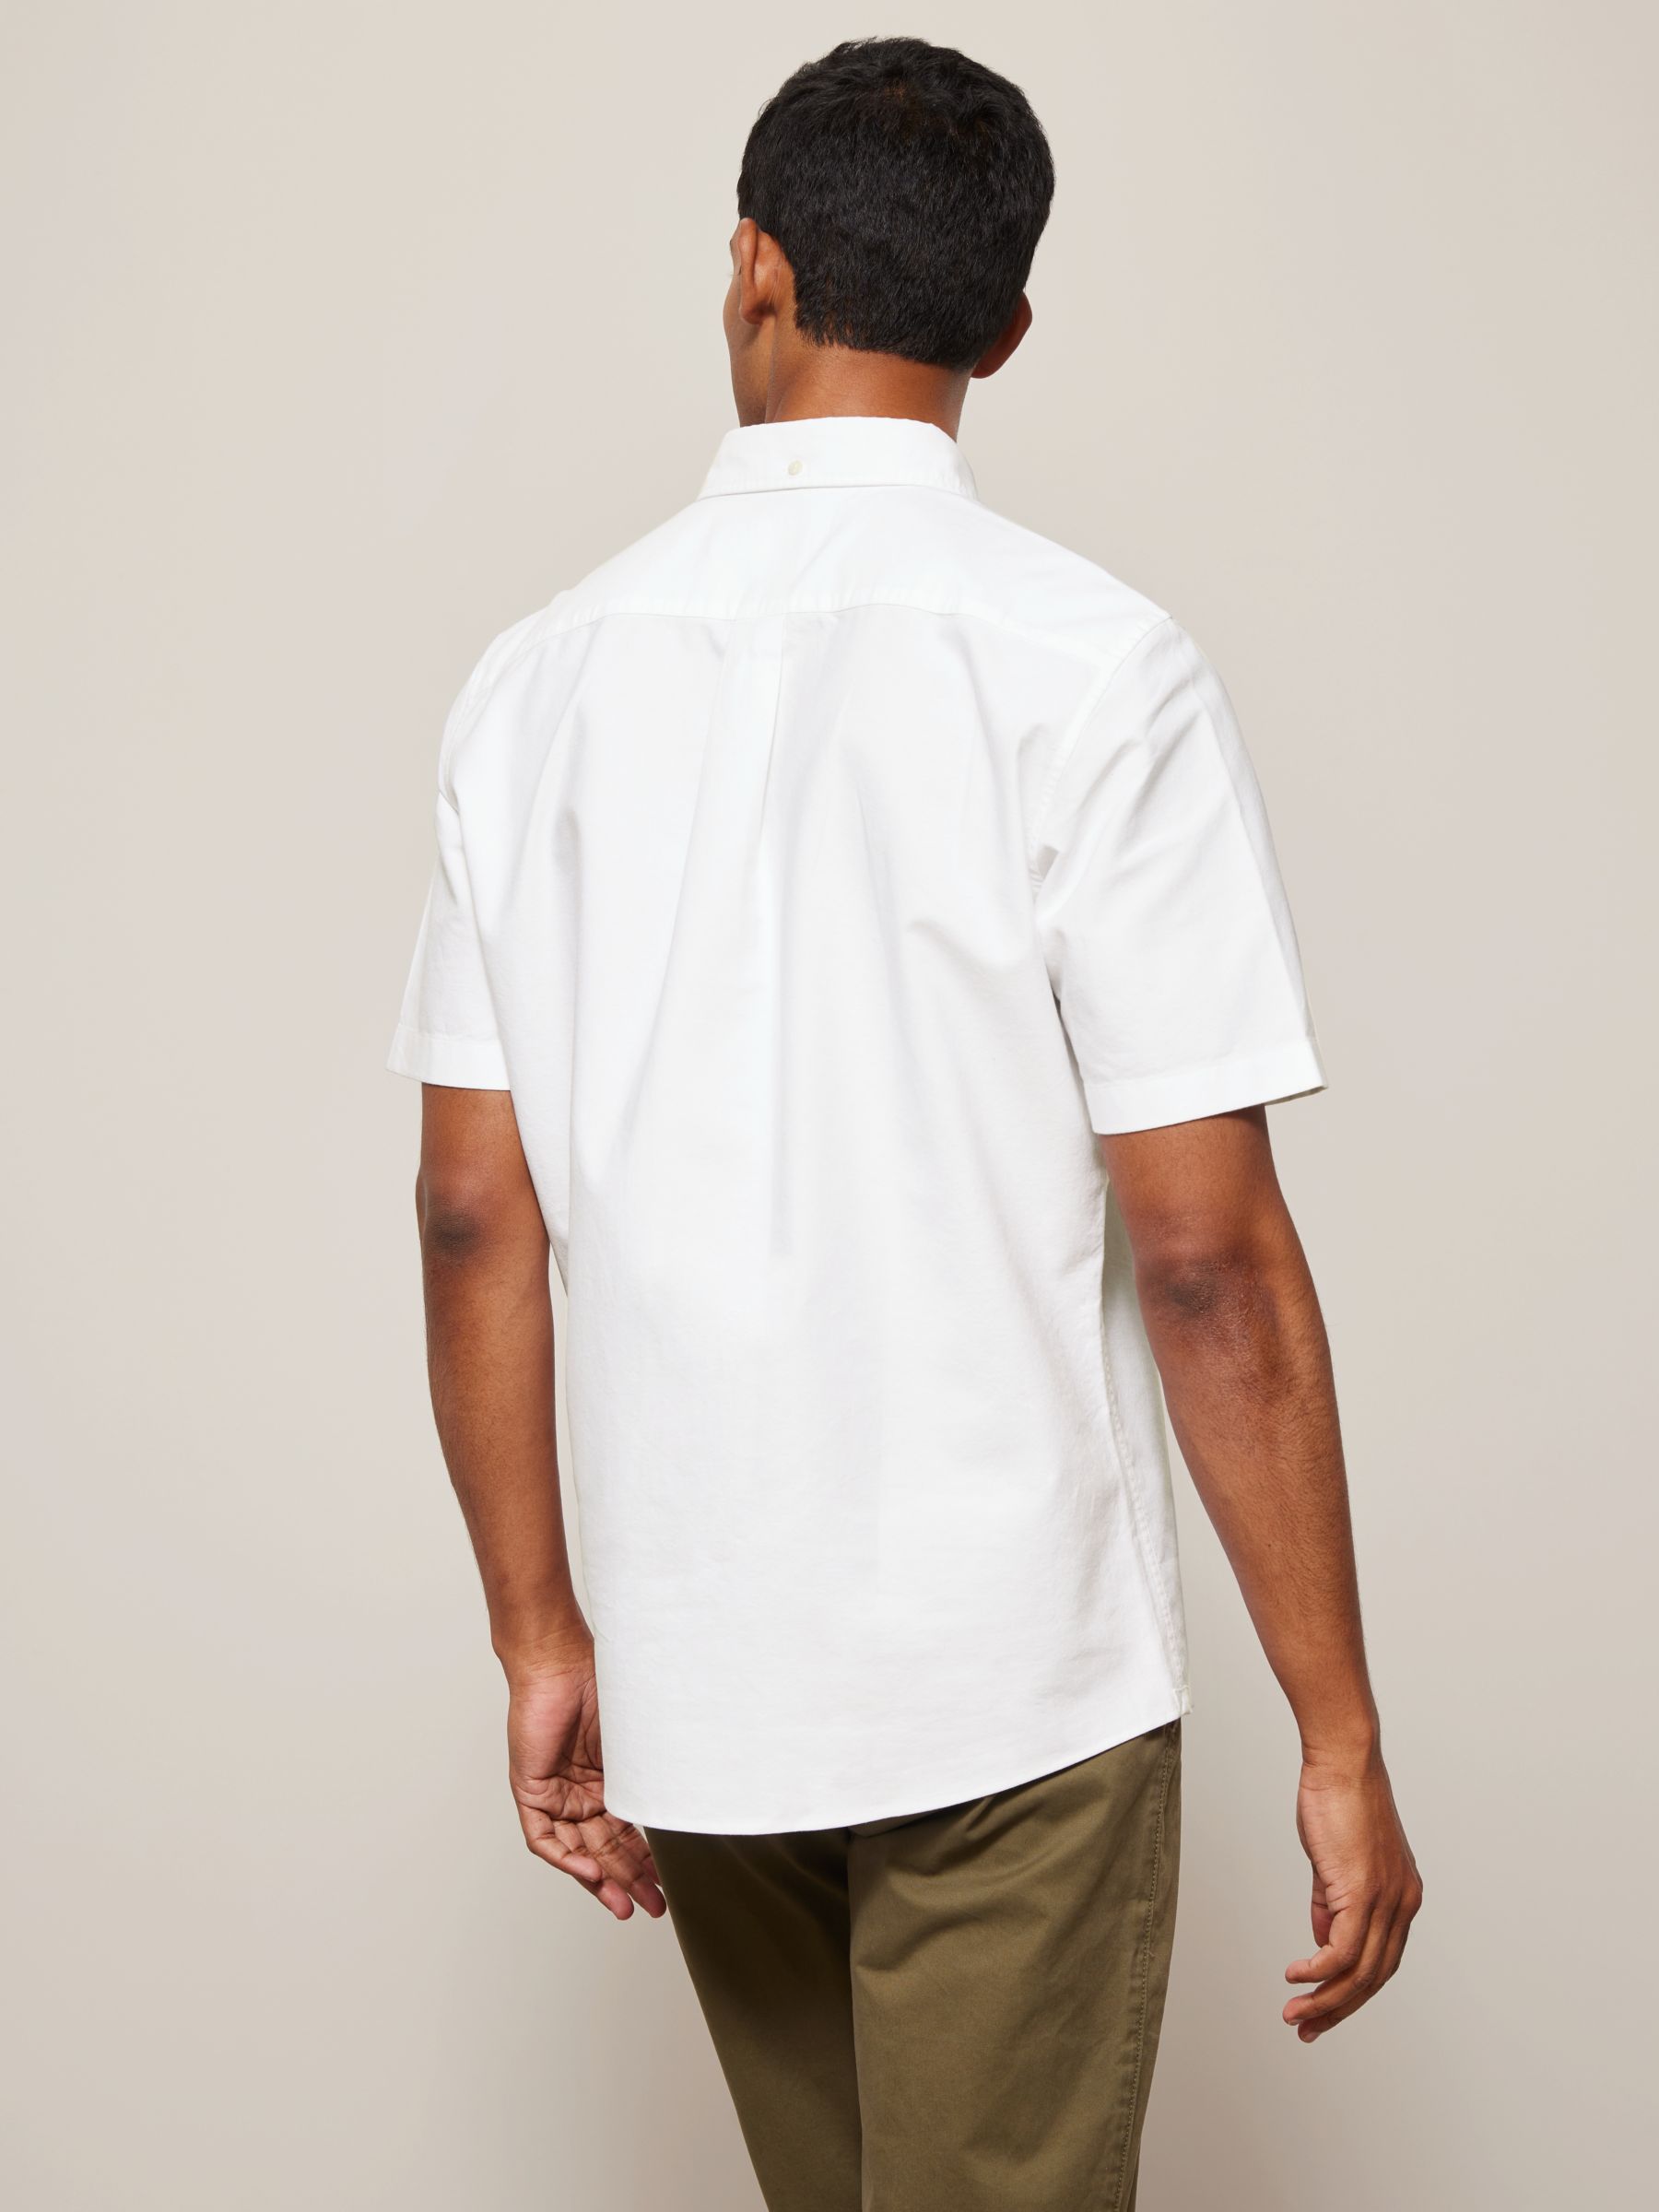 Buy John Lewis Regular Fit Short Sleeve Shirt Online at johnlewis.com